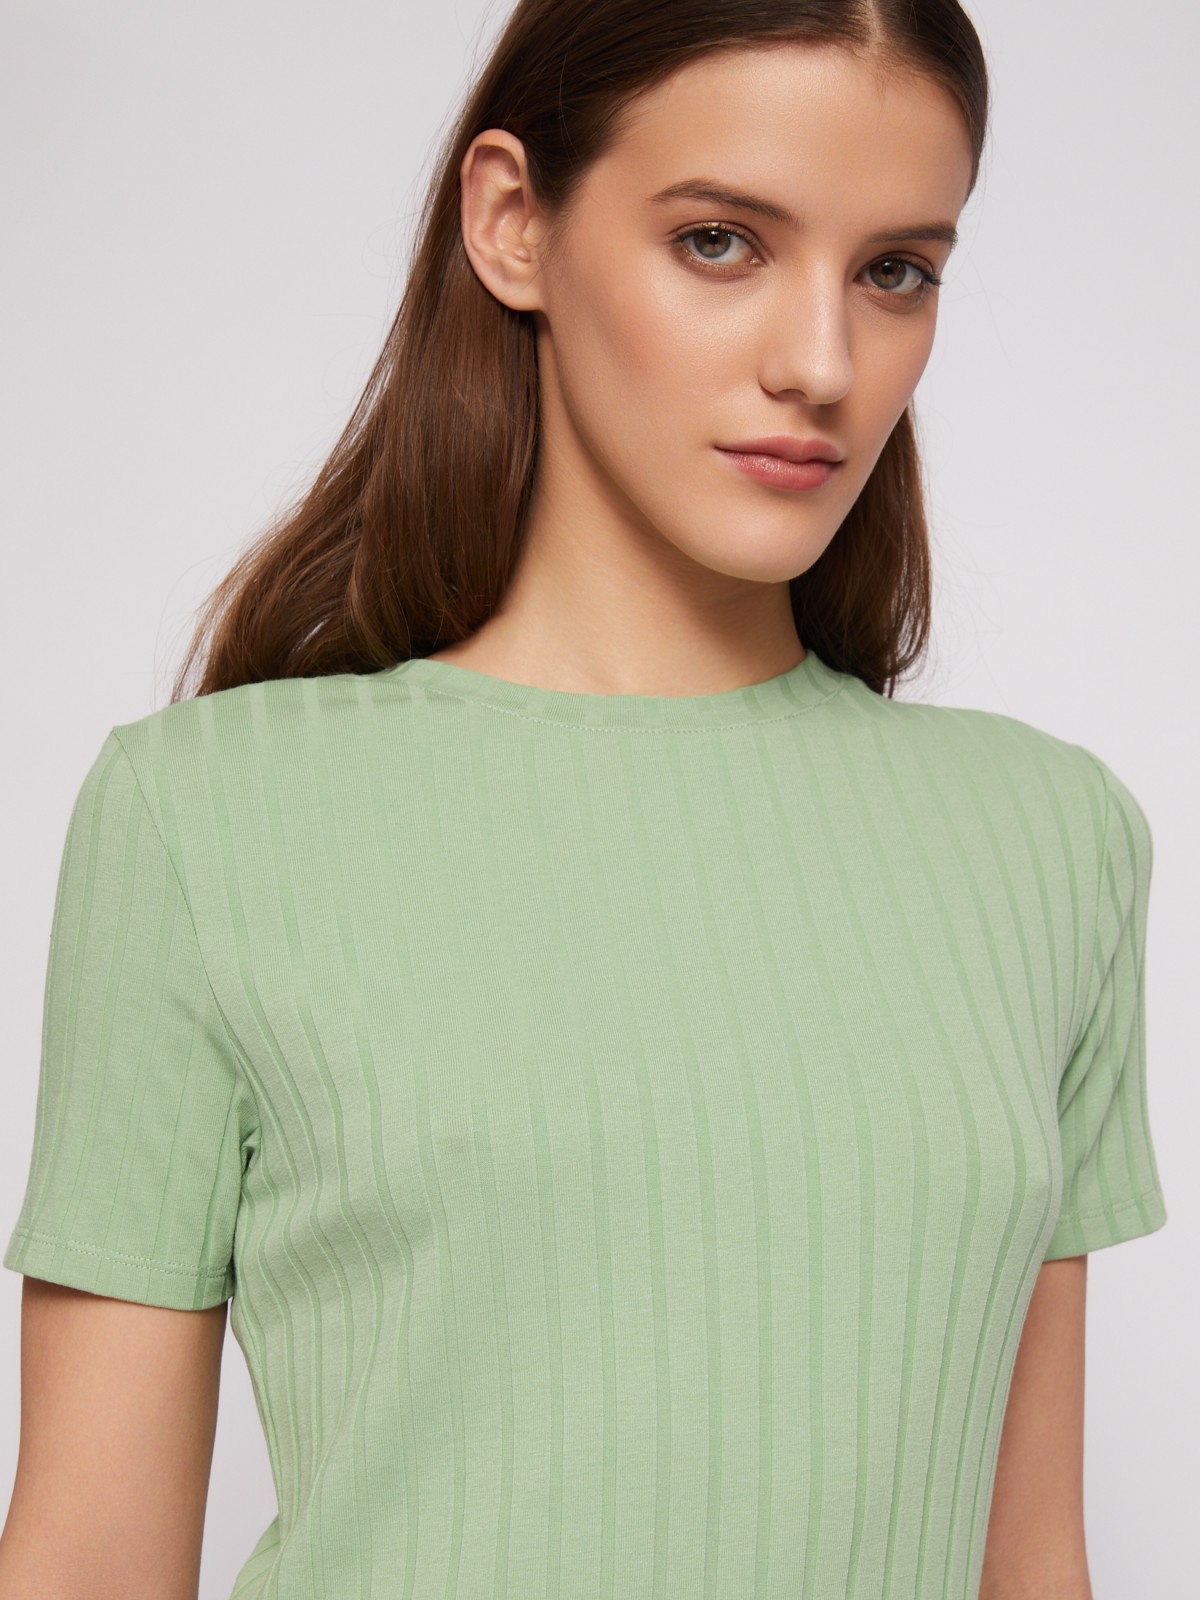 Платье-футболка миди с коротким рукавом zolla N24218139133, цвет светло-зеленый, размер XS - фото 5